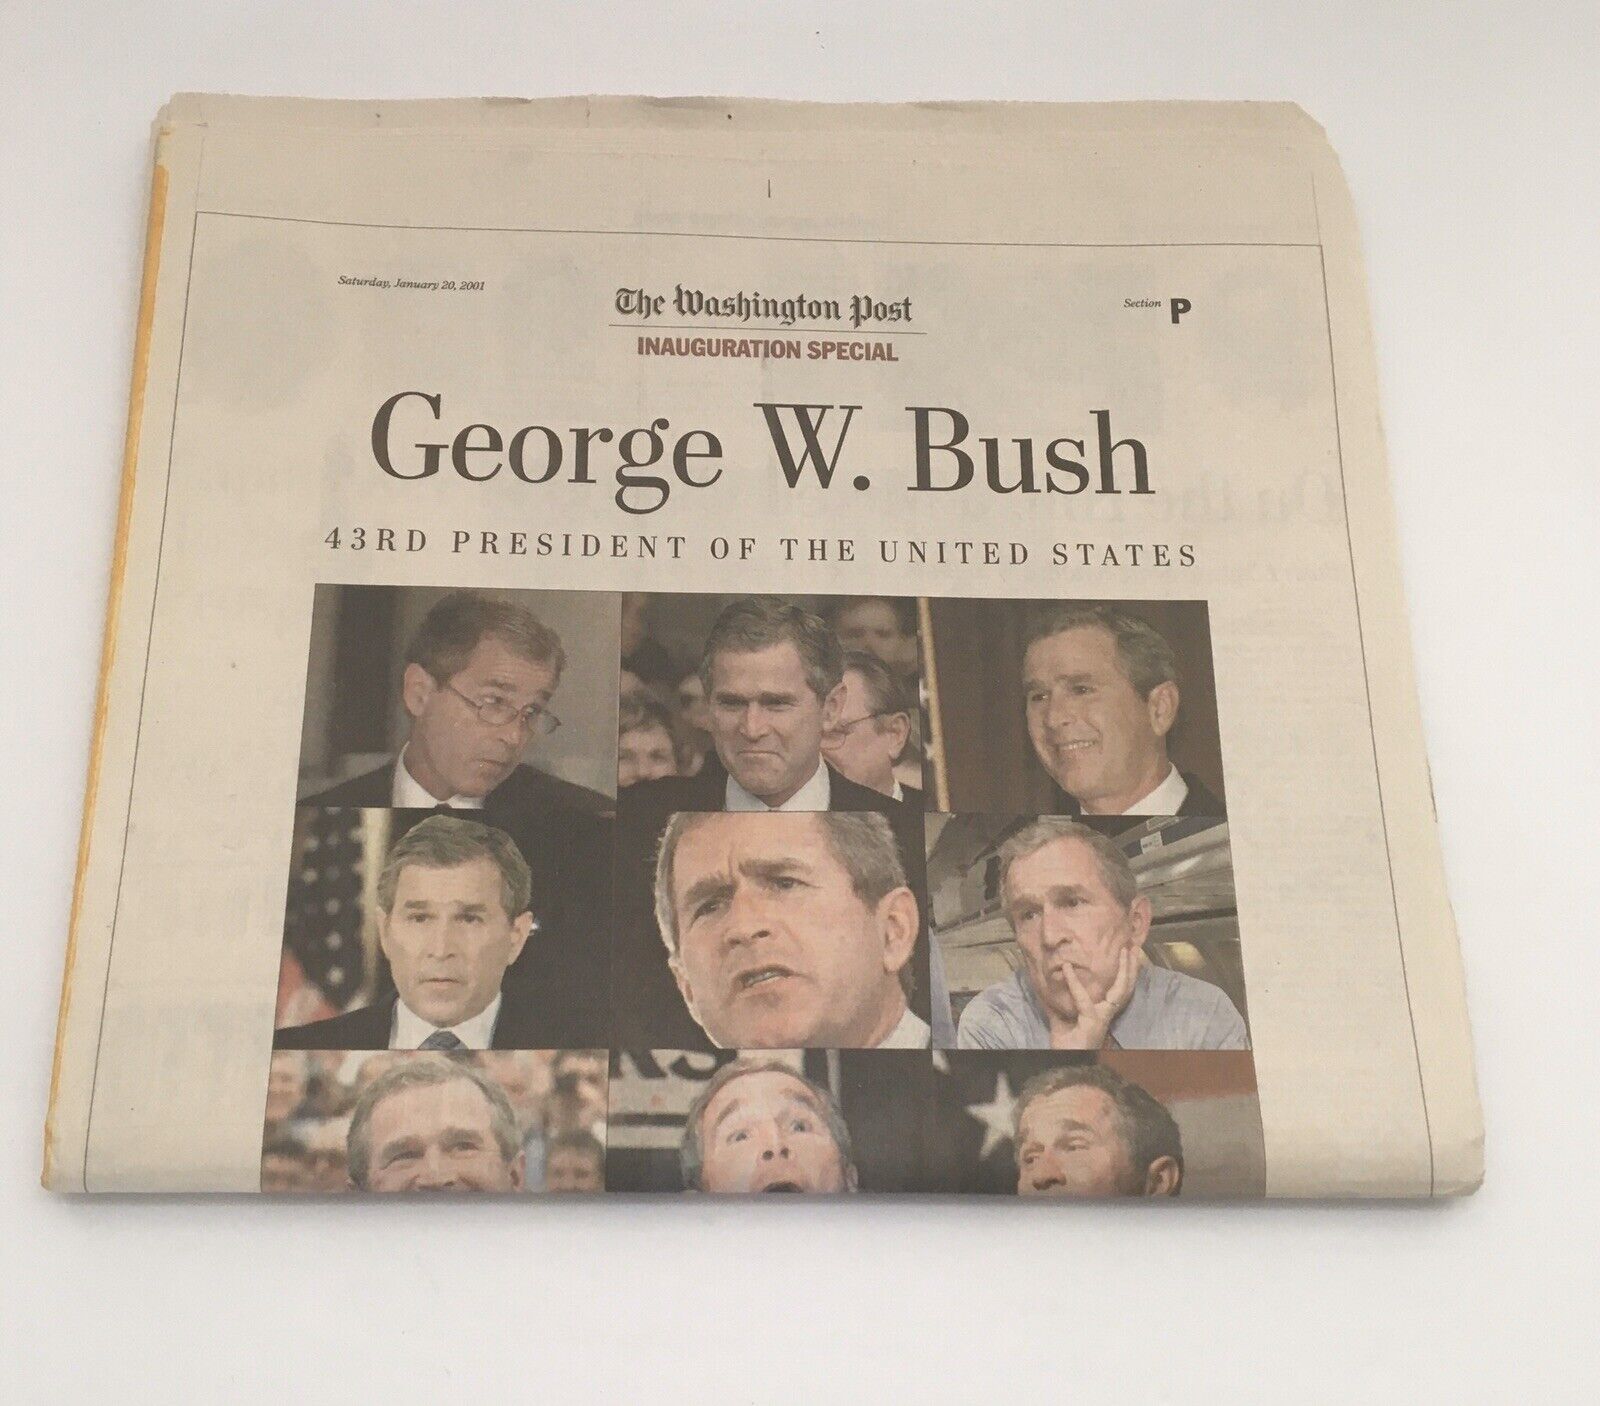 2001 JAN 20 WASHINGTON POST NEWSPAPER GEORGE BUSH INAUGURATION - 43rd President